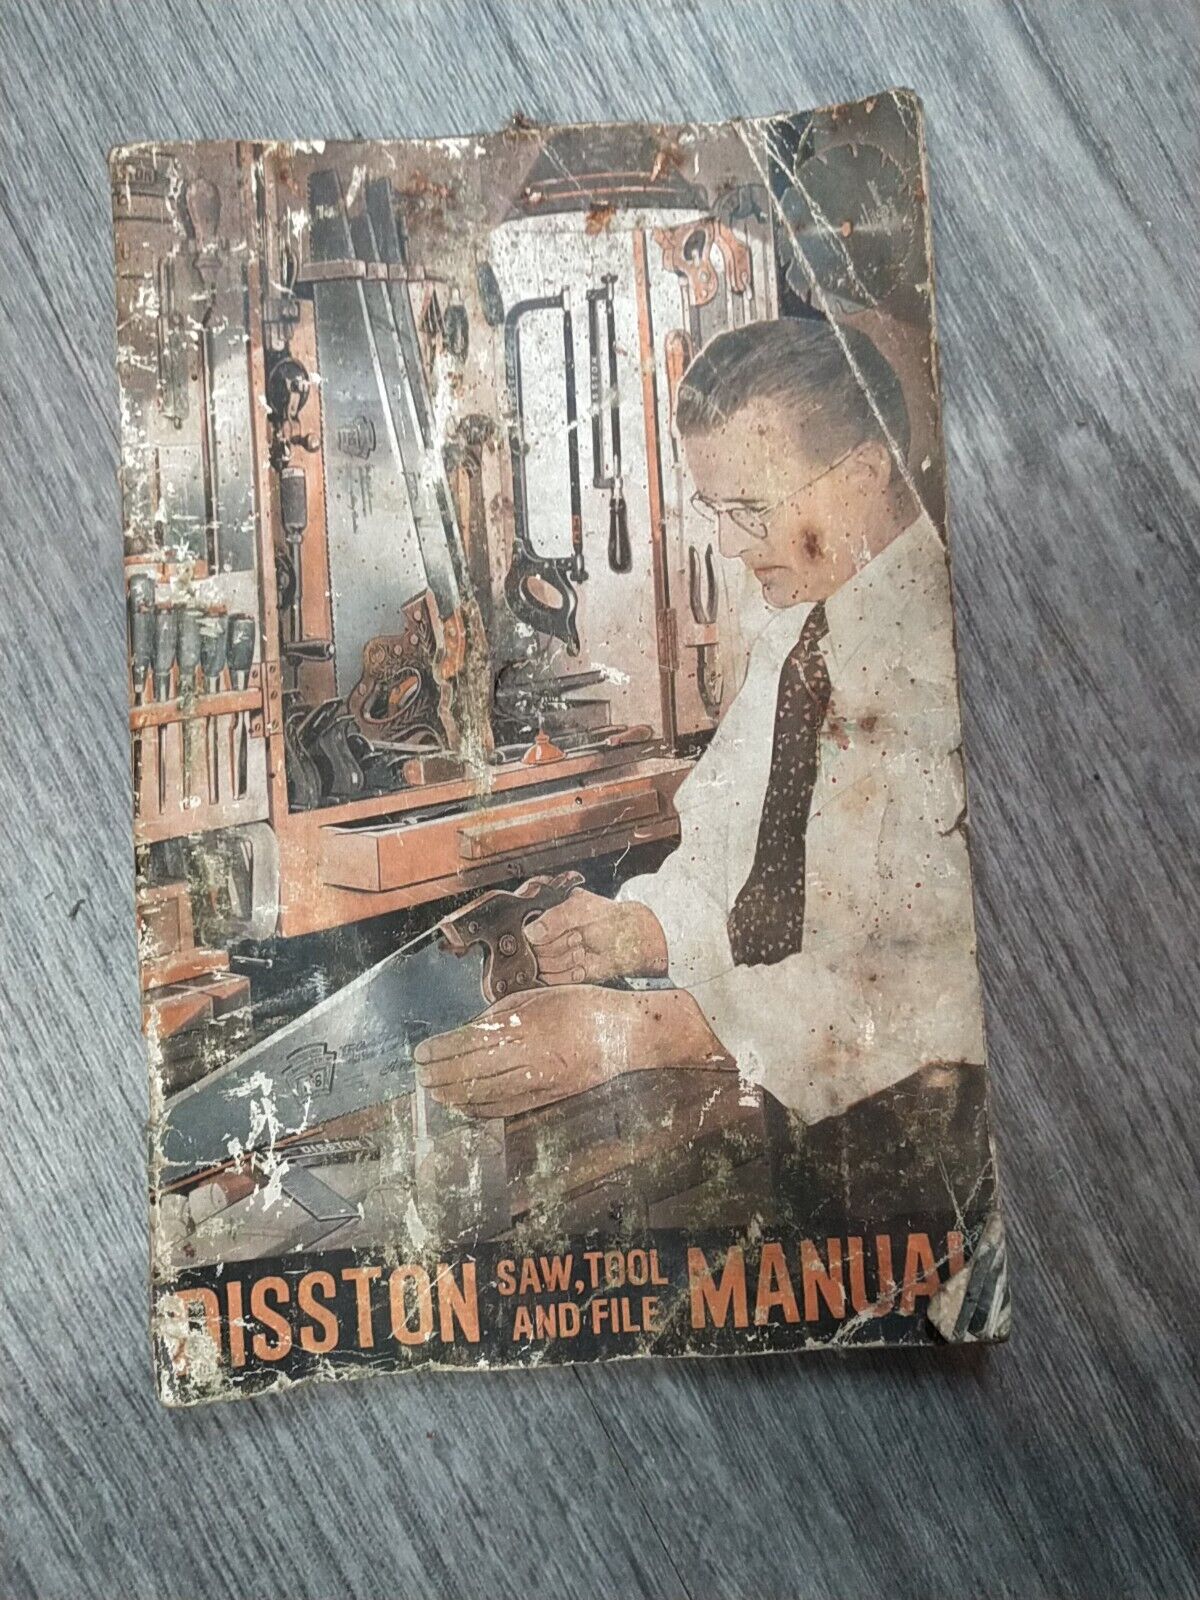 1939 Disston Saw Tool and File Manual vintage